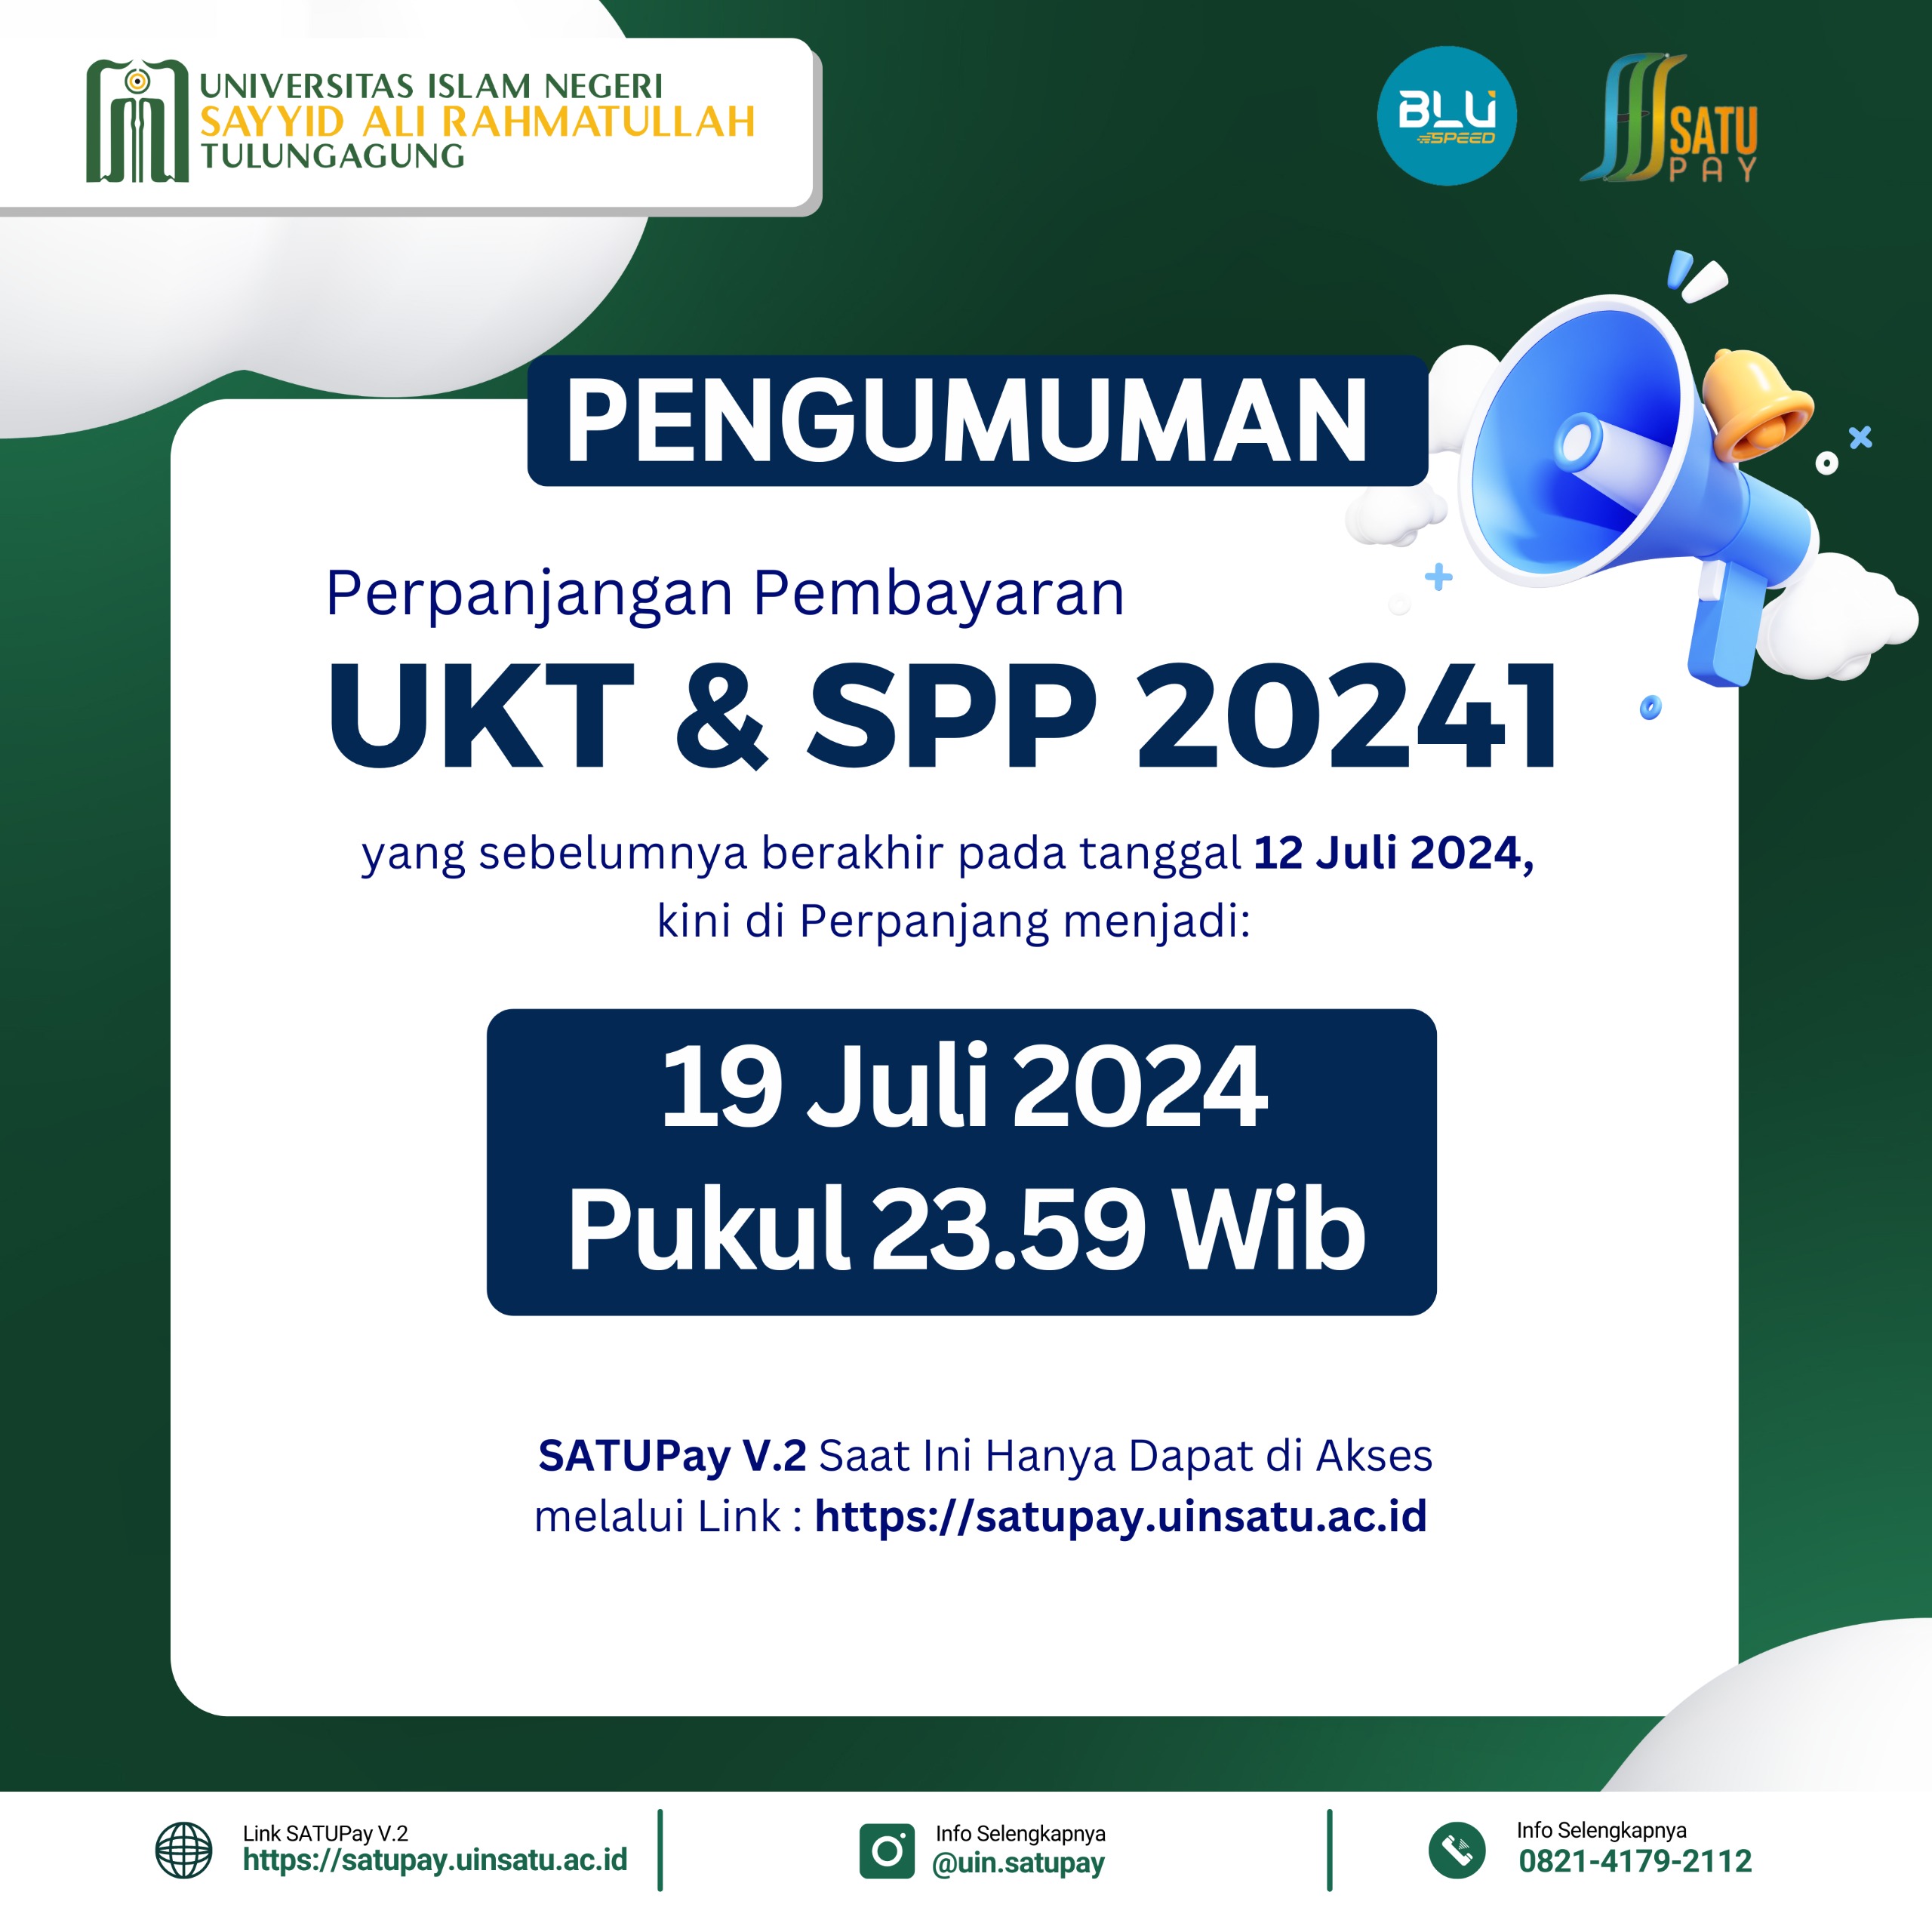 Pengumuman Perpanjangan Pembayaran UKT dan SPP Semester Ganjil TA 2024/2025